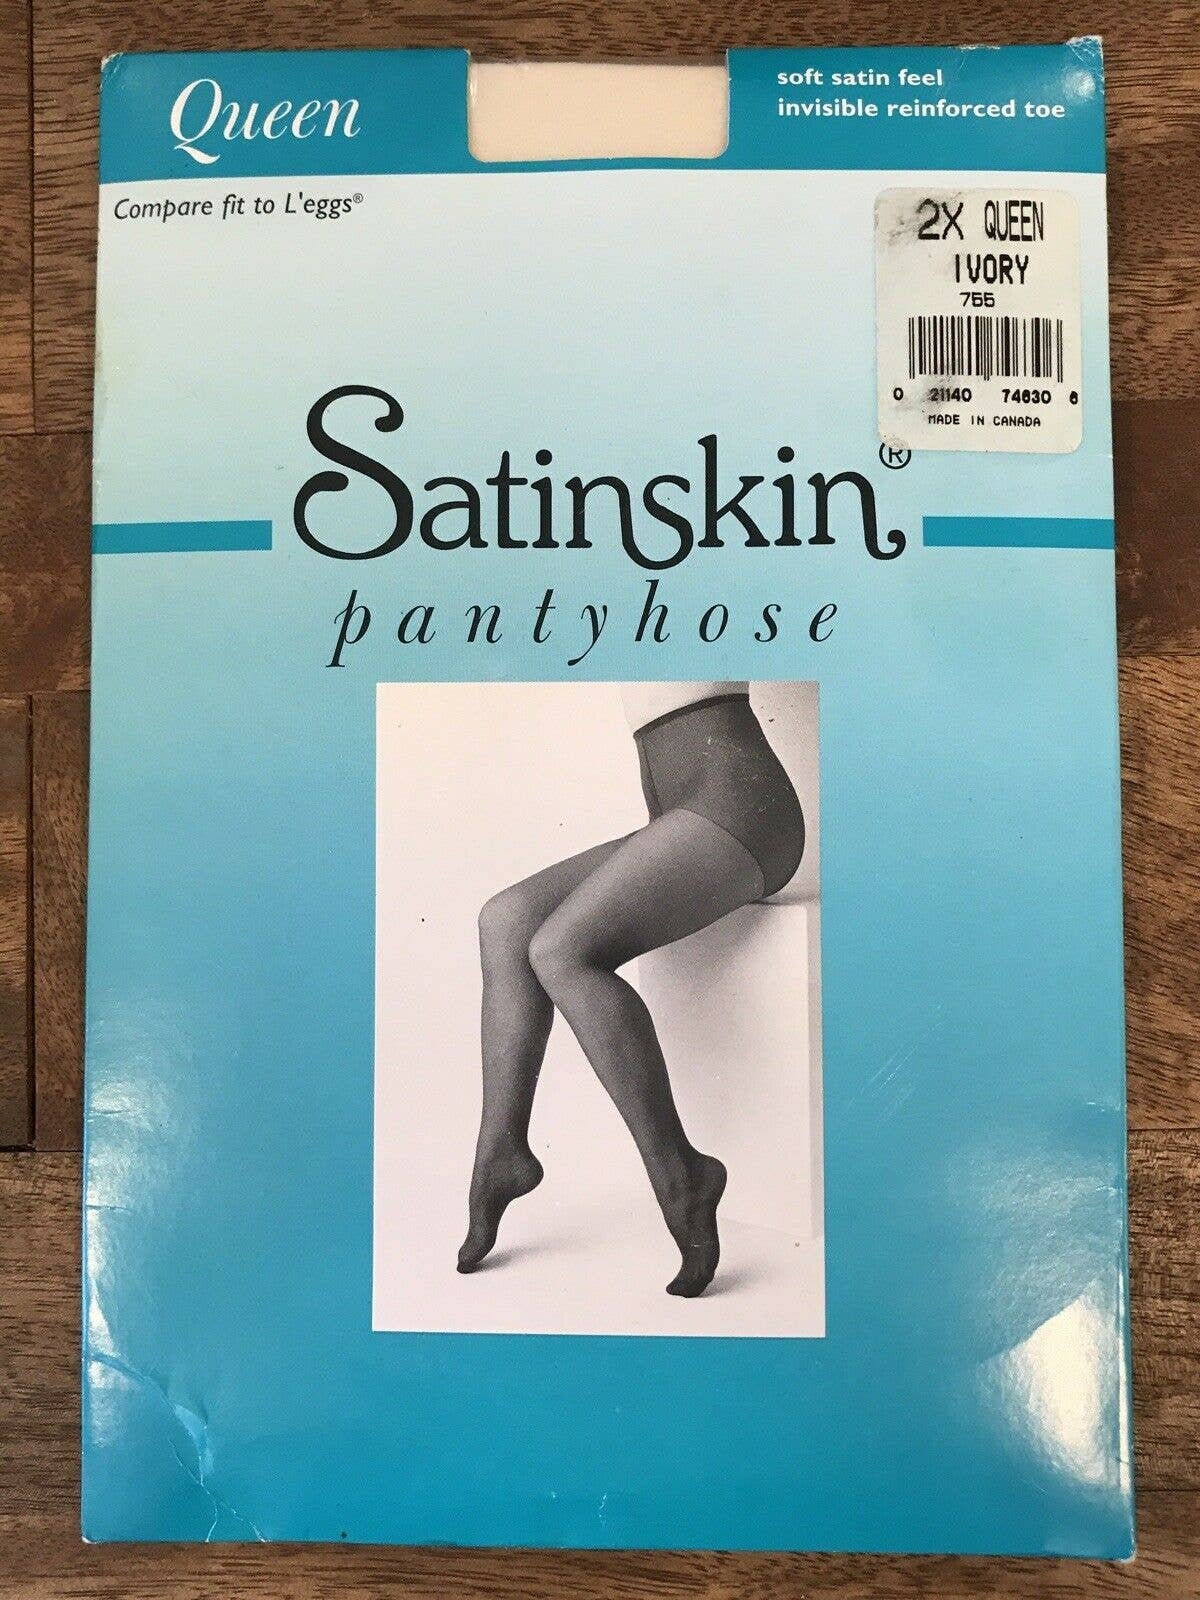 SATINSKIN Pantyhose Queen Size 2X Reinforced Toe Soft Satin